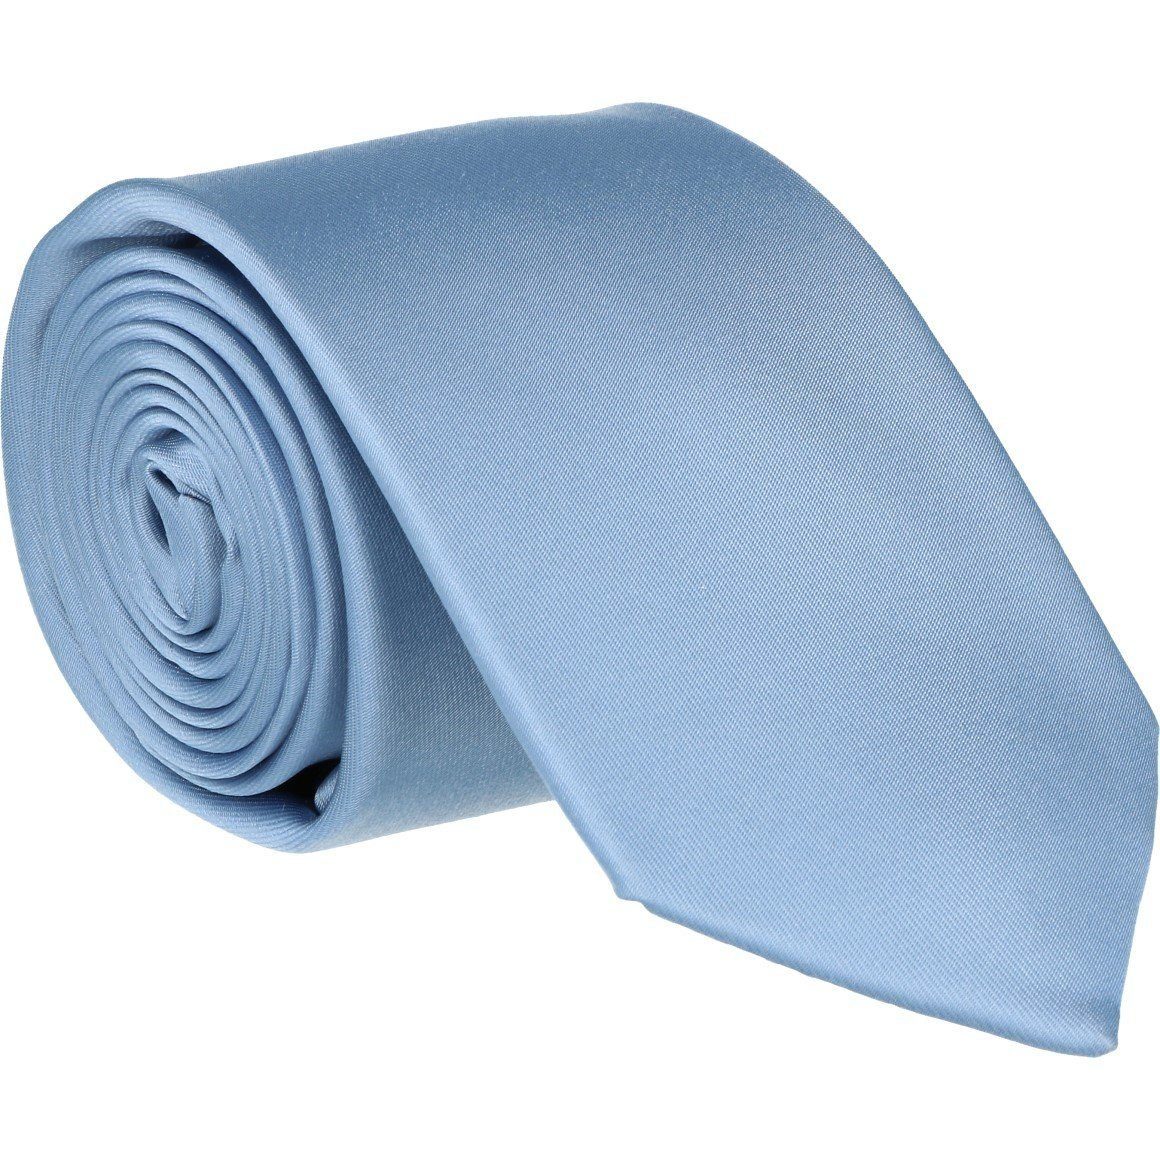 blau Krawatte/Fliege Hemd Weste, & WILLEN